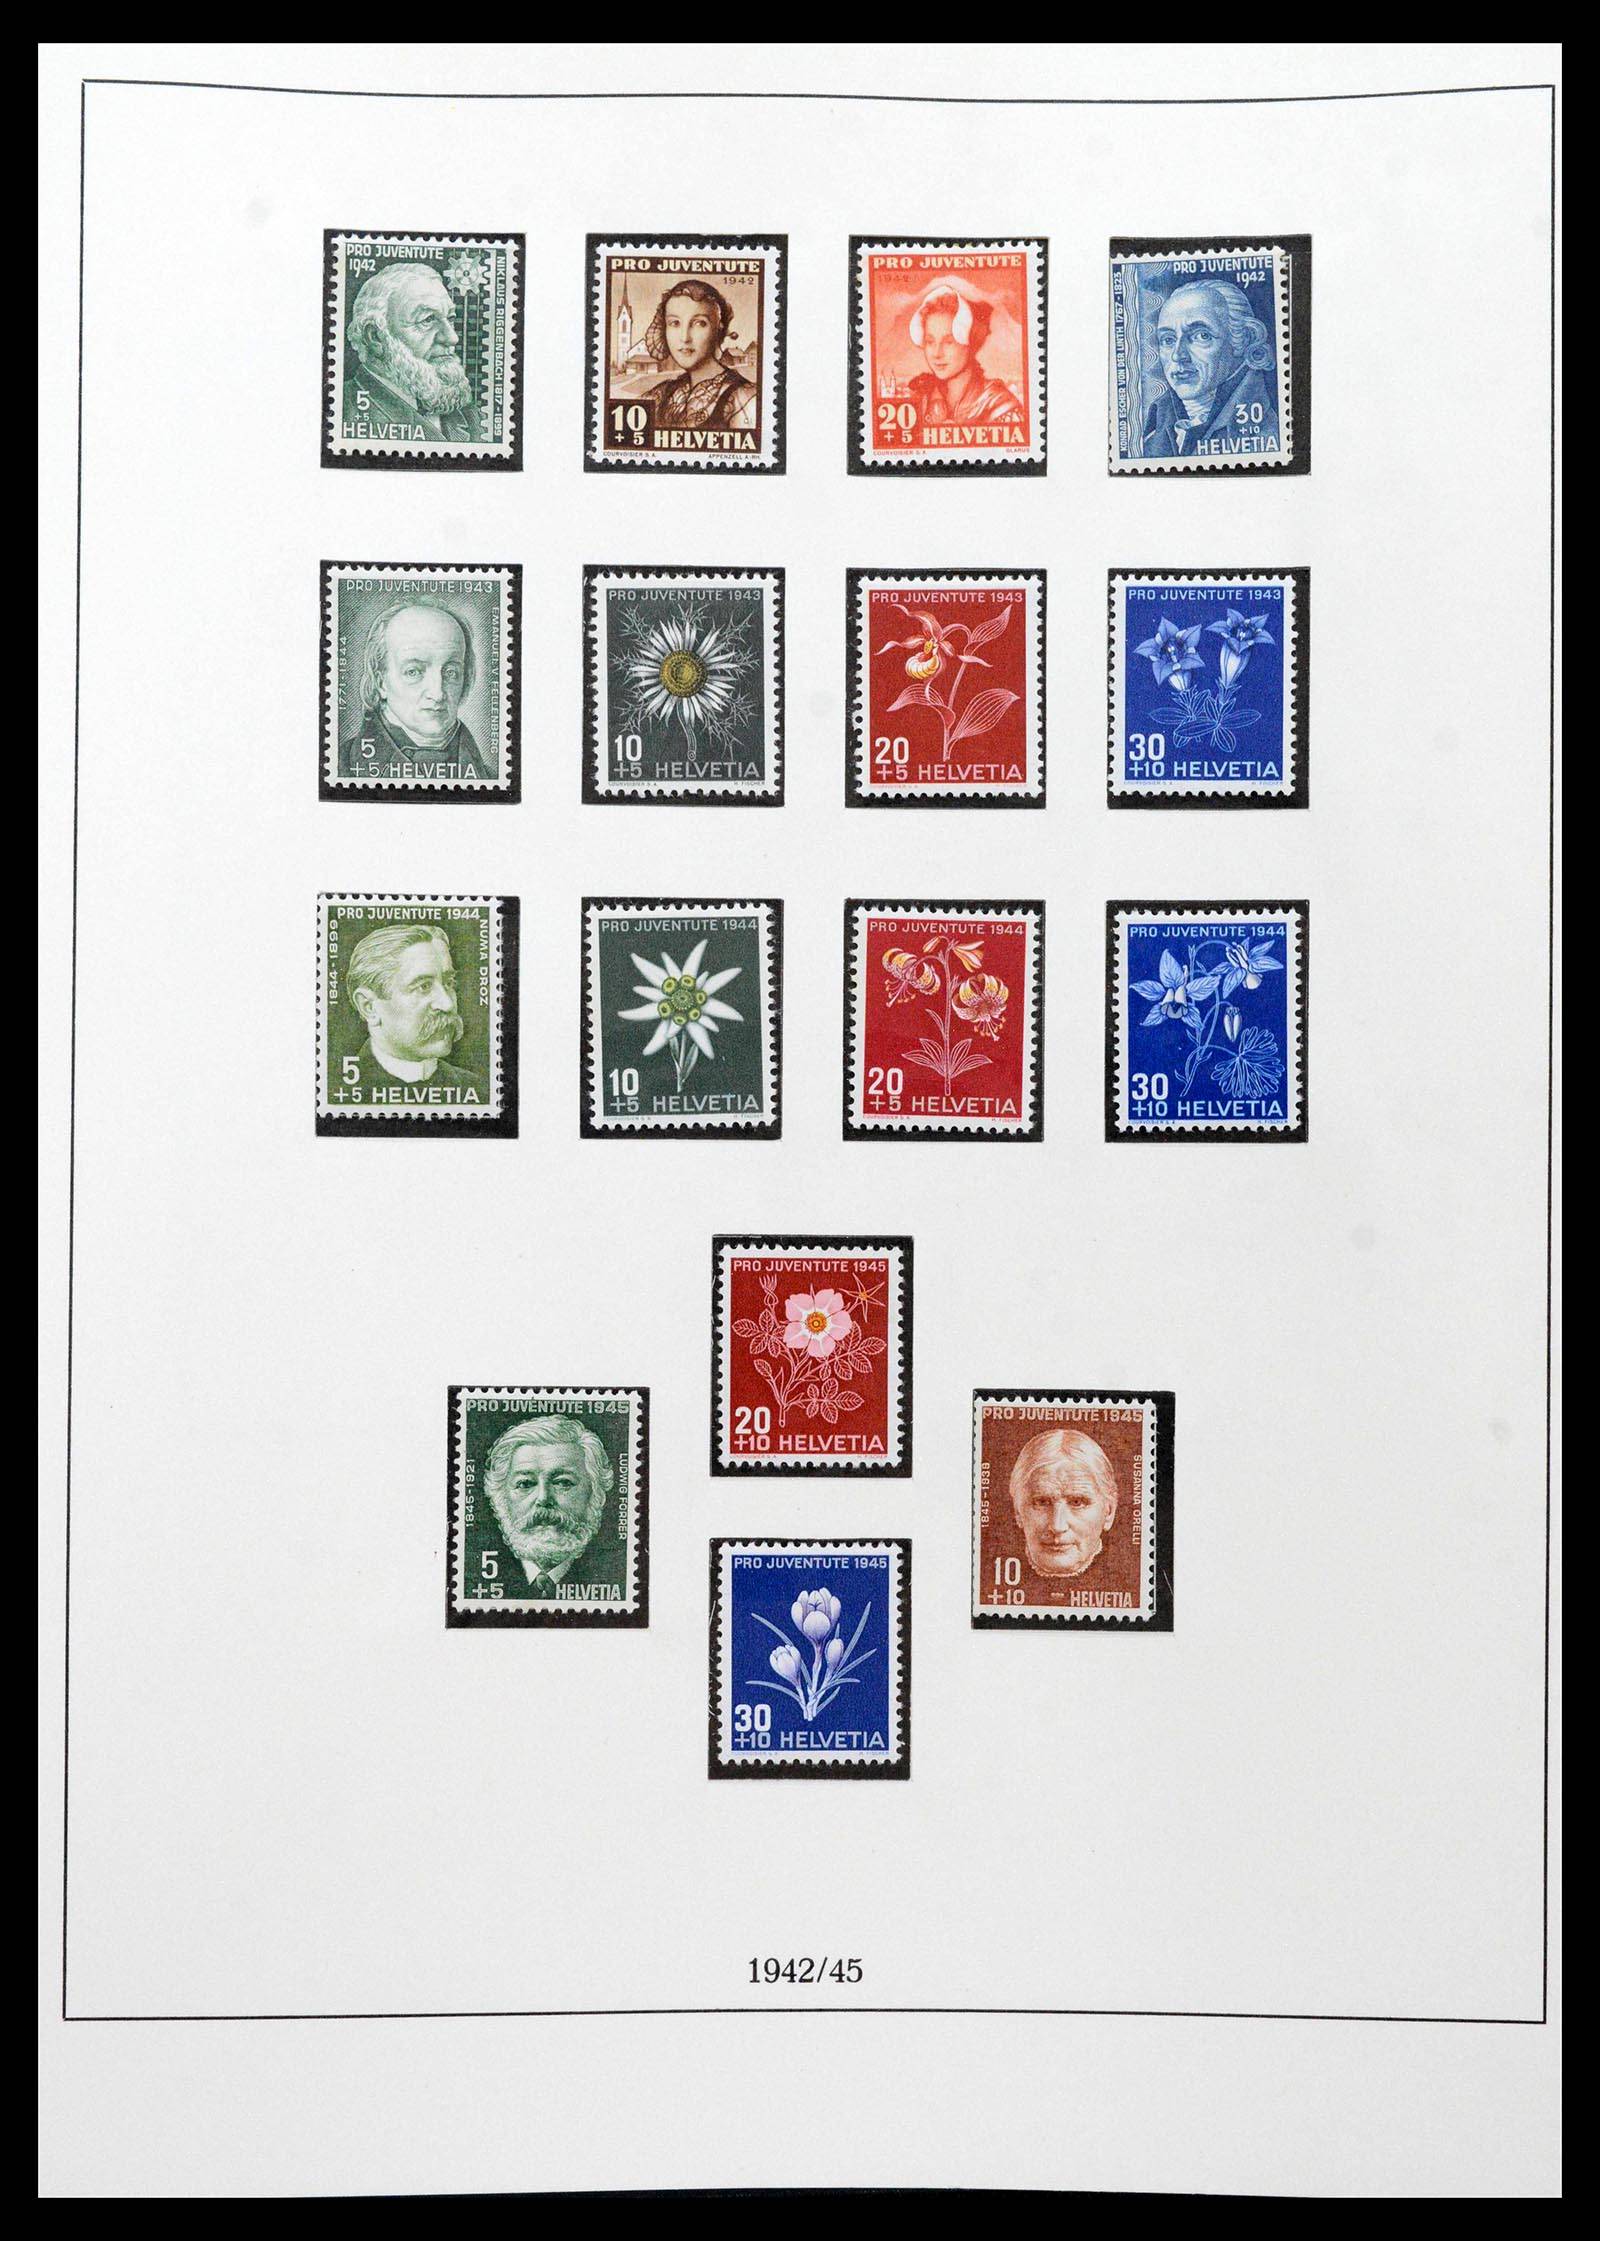 39235 0036 - Stamp collection 39235 Switzerland 1843-1960.